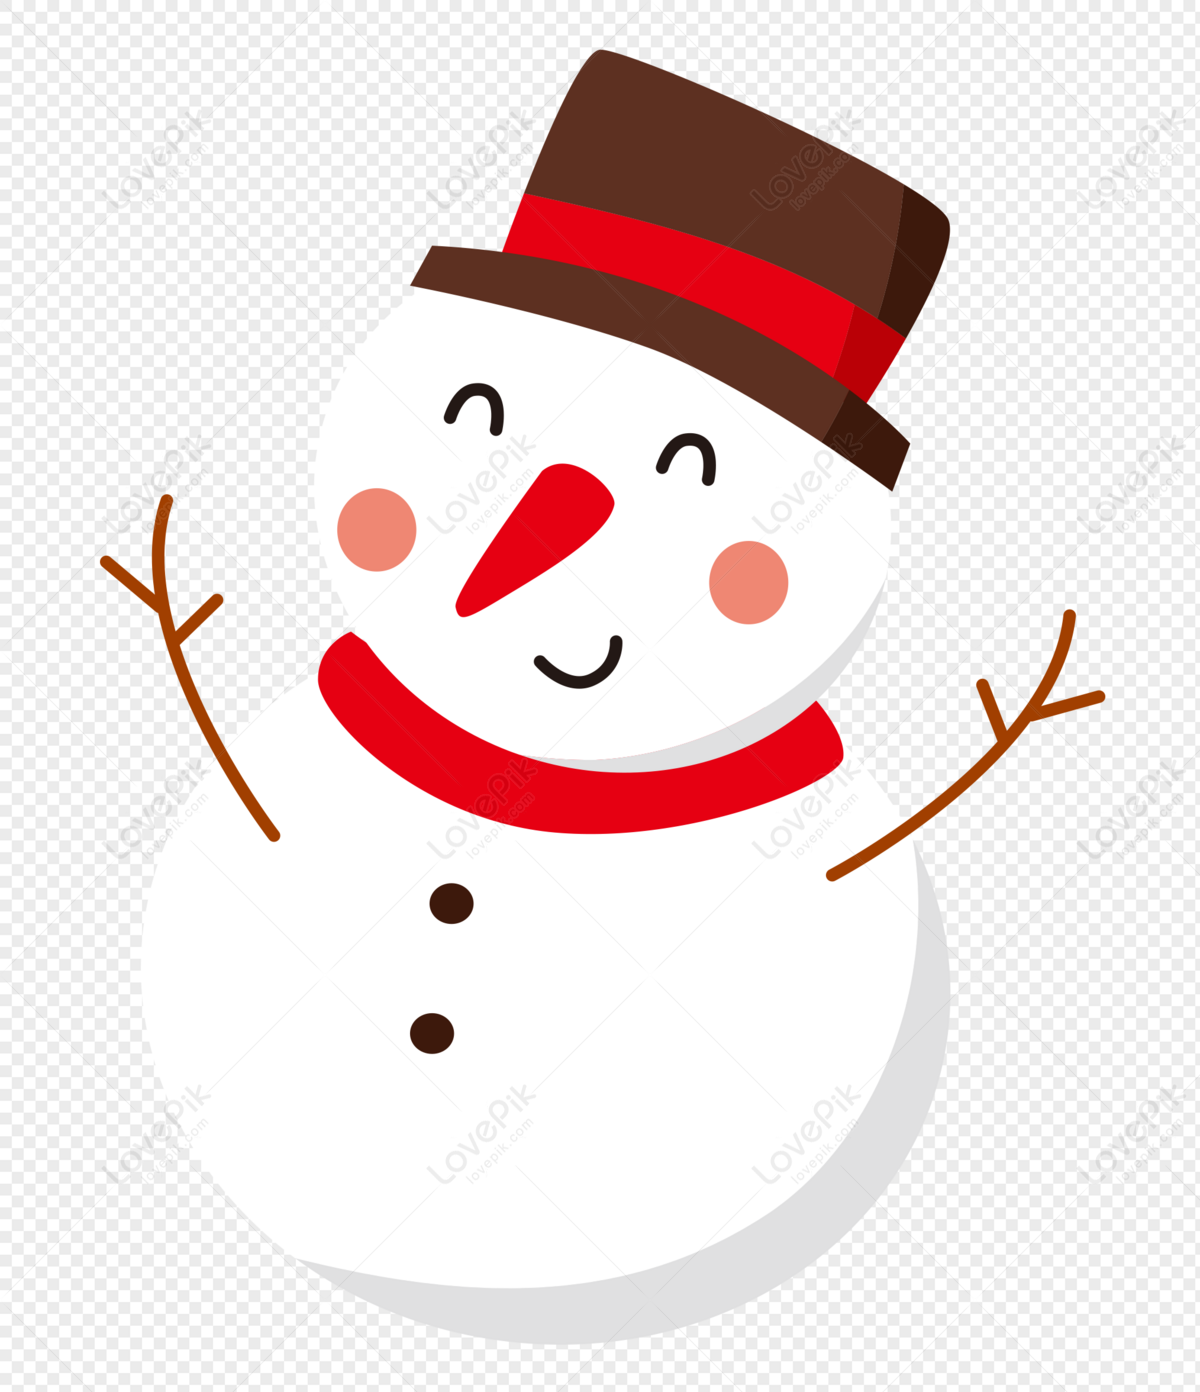 Cute Snowman Cartoon Vector Icon Illustration - Snowman - Sticker